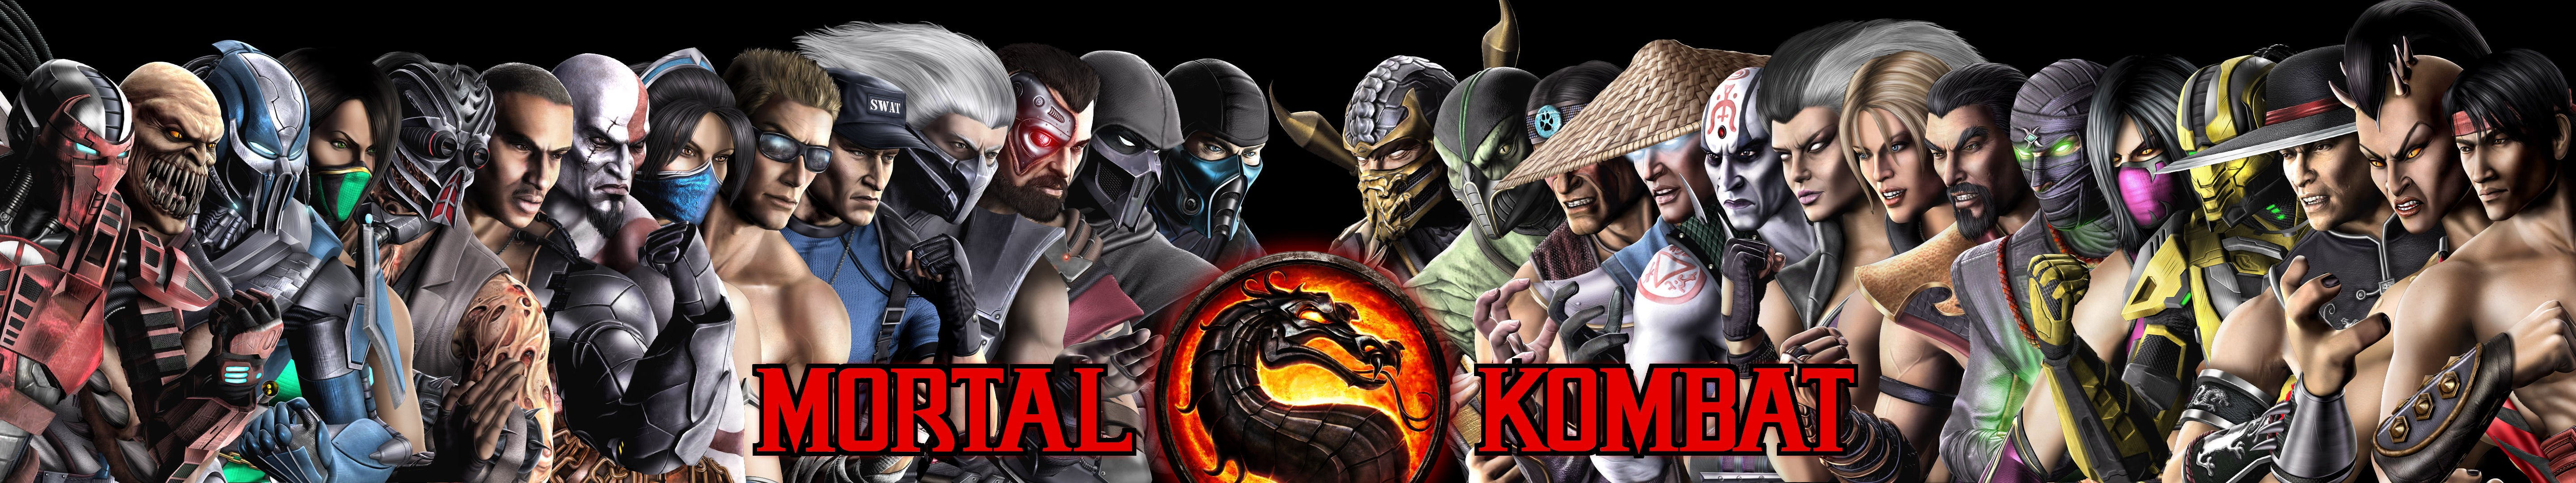 Mortal Kombat 9 wallpaper